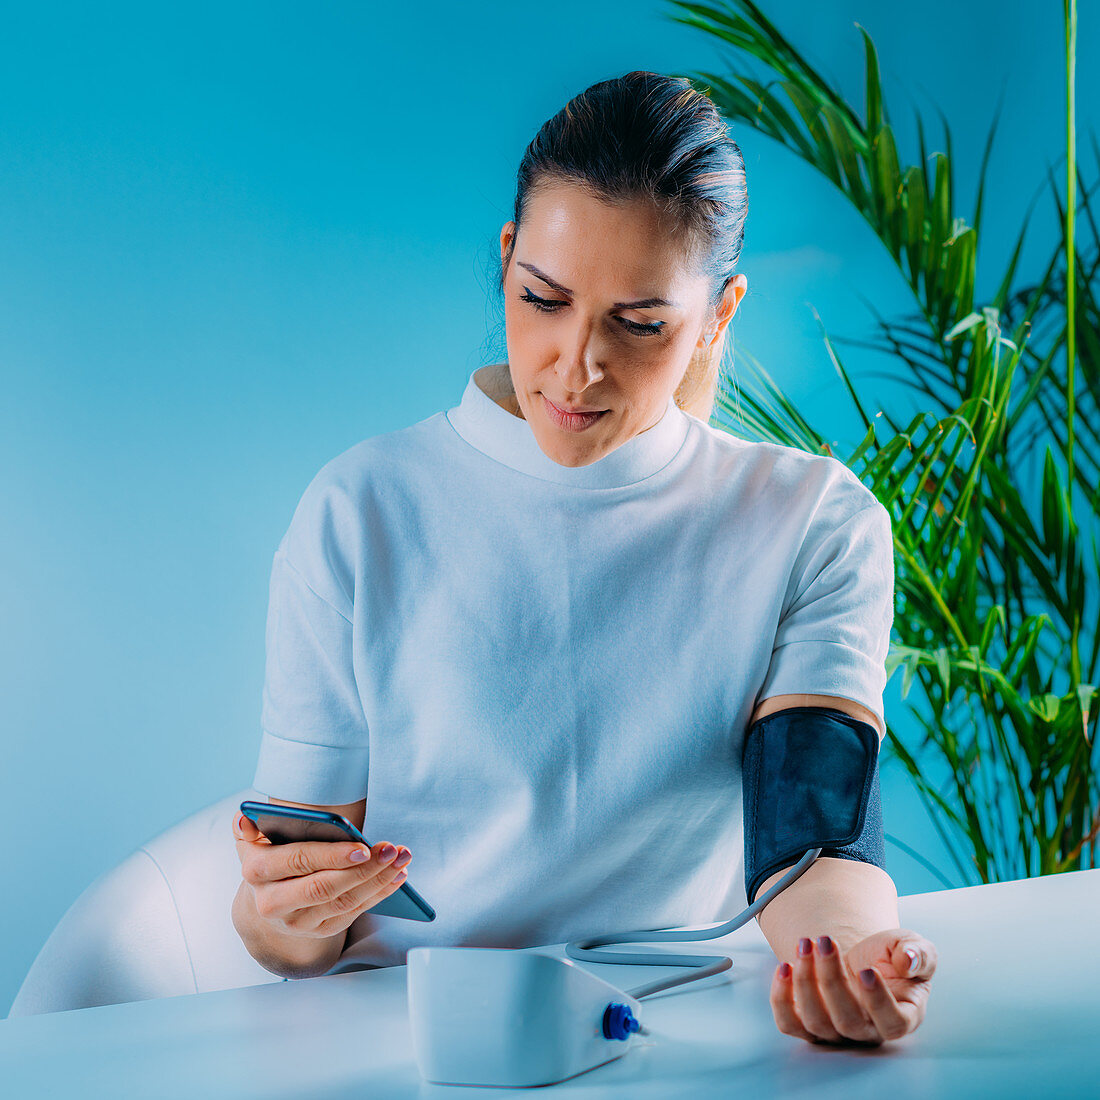 Woman entering blood pressure data in smart phone